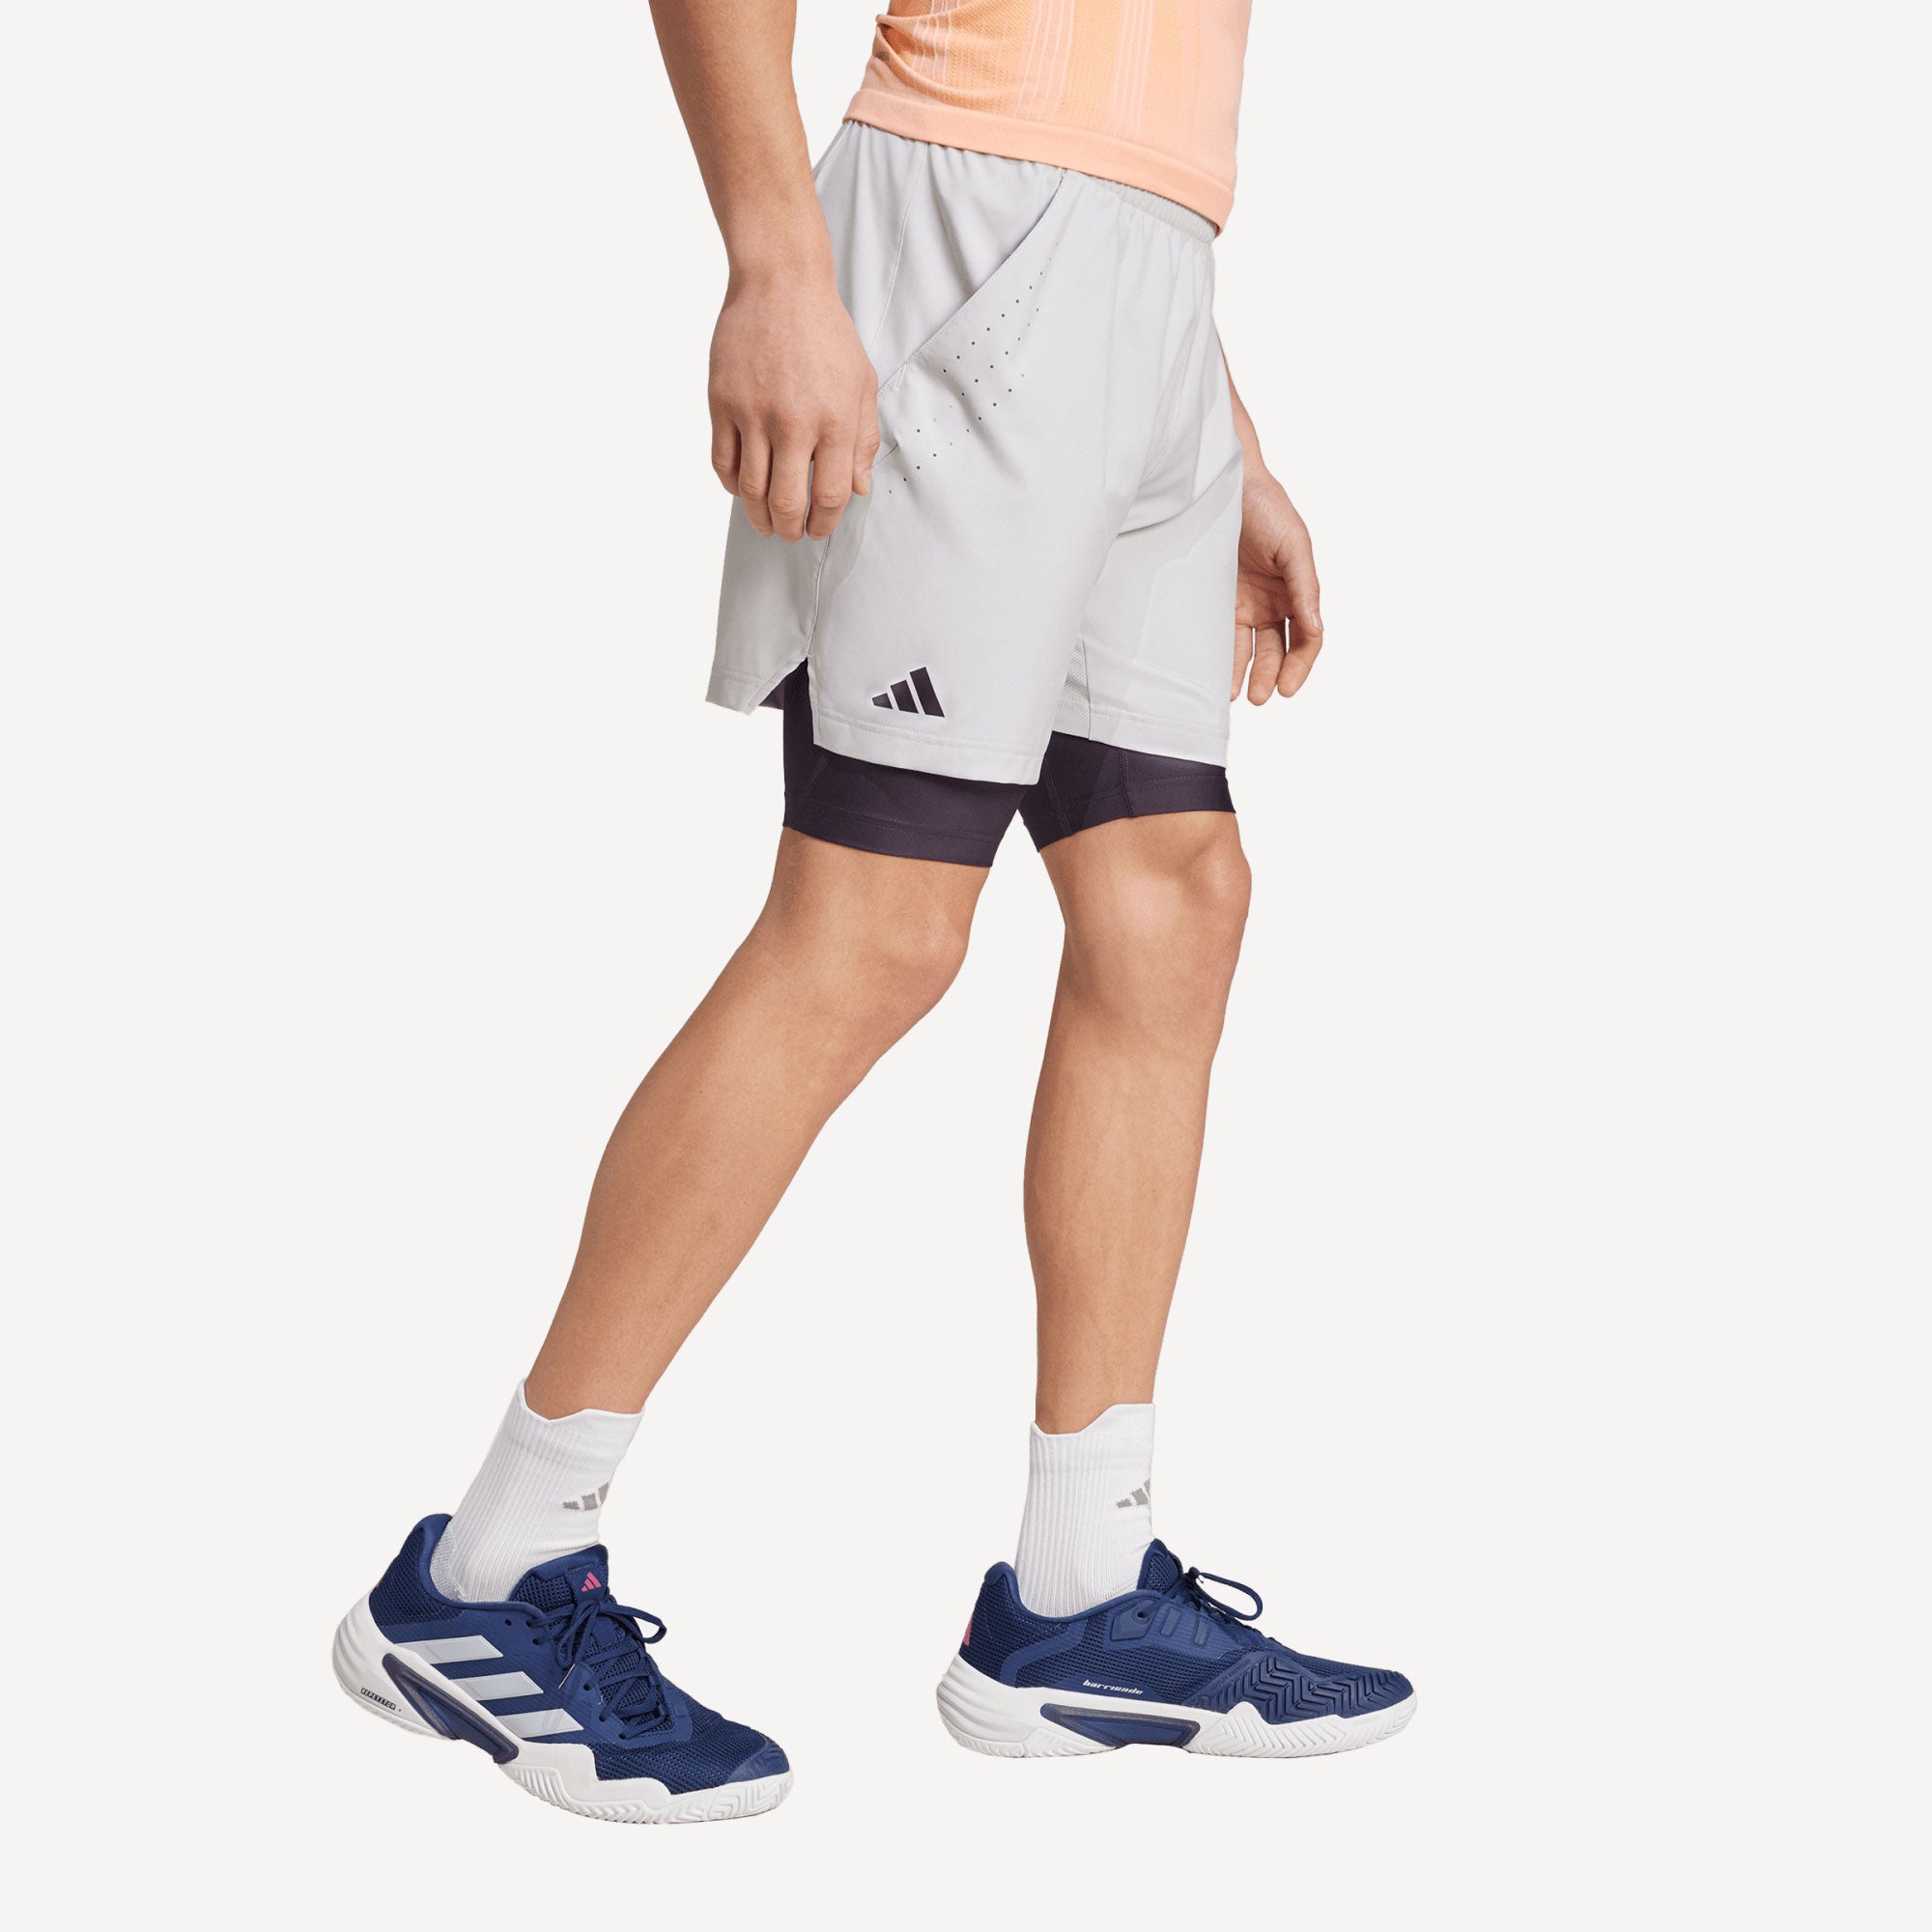 adidas Pro Men's Tennis Shorts and Inner Shorts Set - Grey (3)